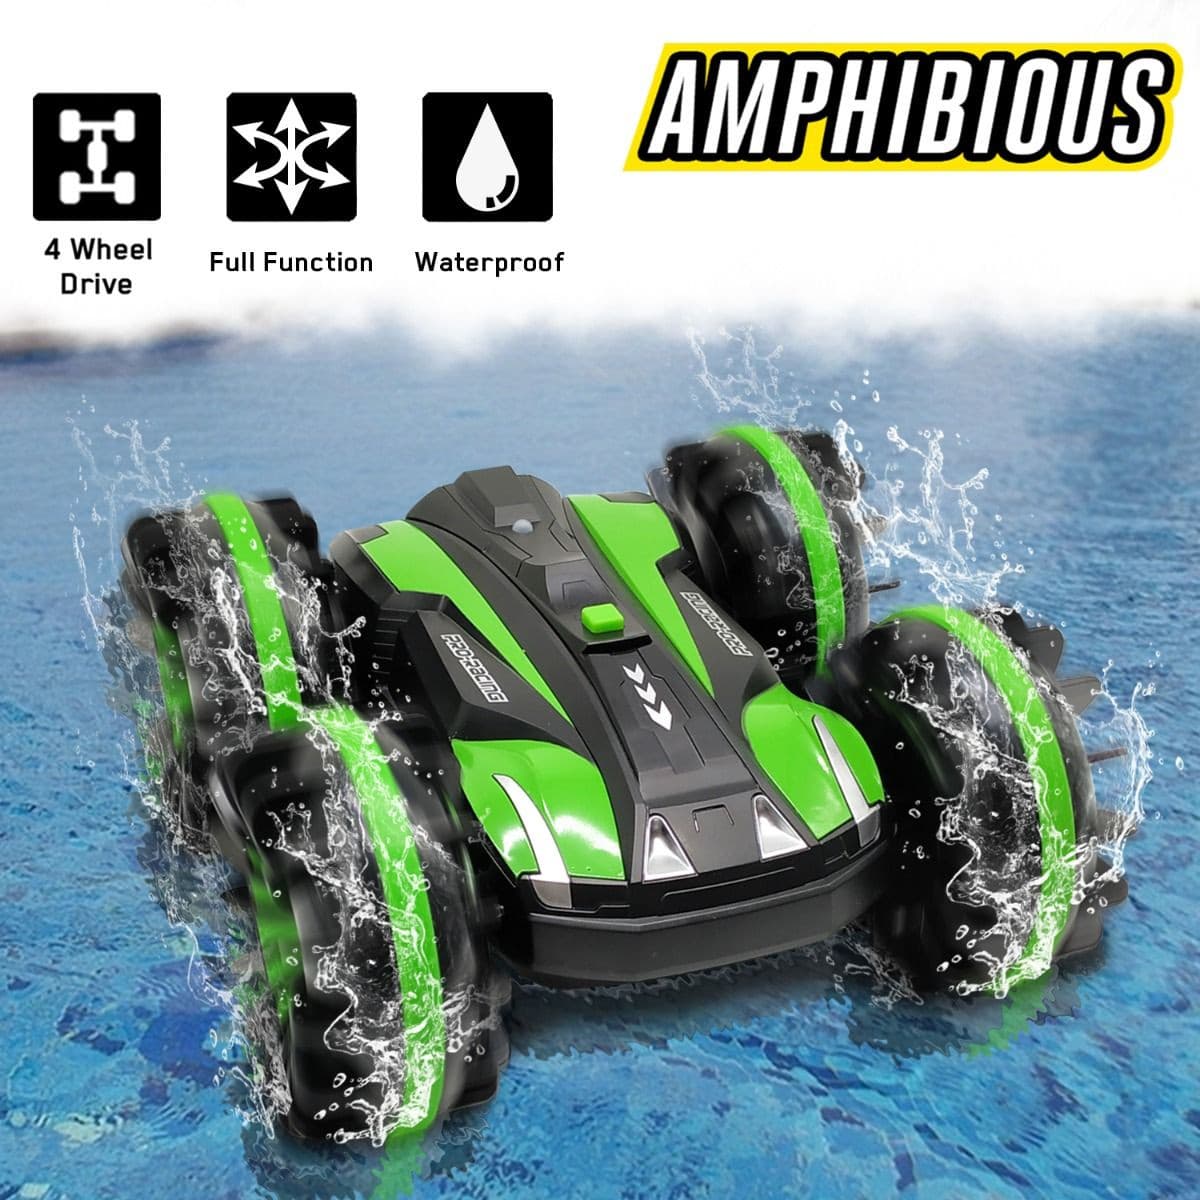 All Terrain Amphibious Waterproof RC Stunt Car | VOLANTEXRC OFFICIAL